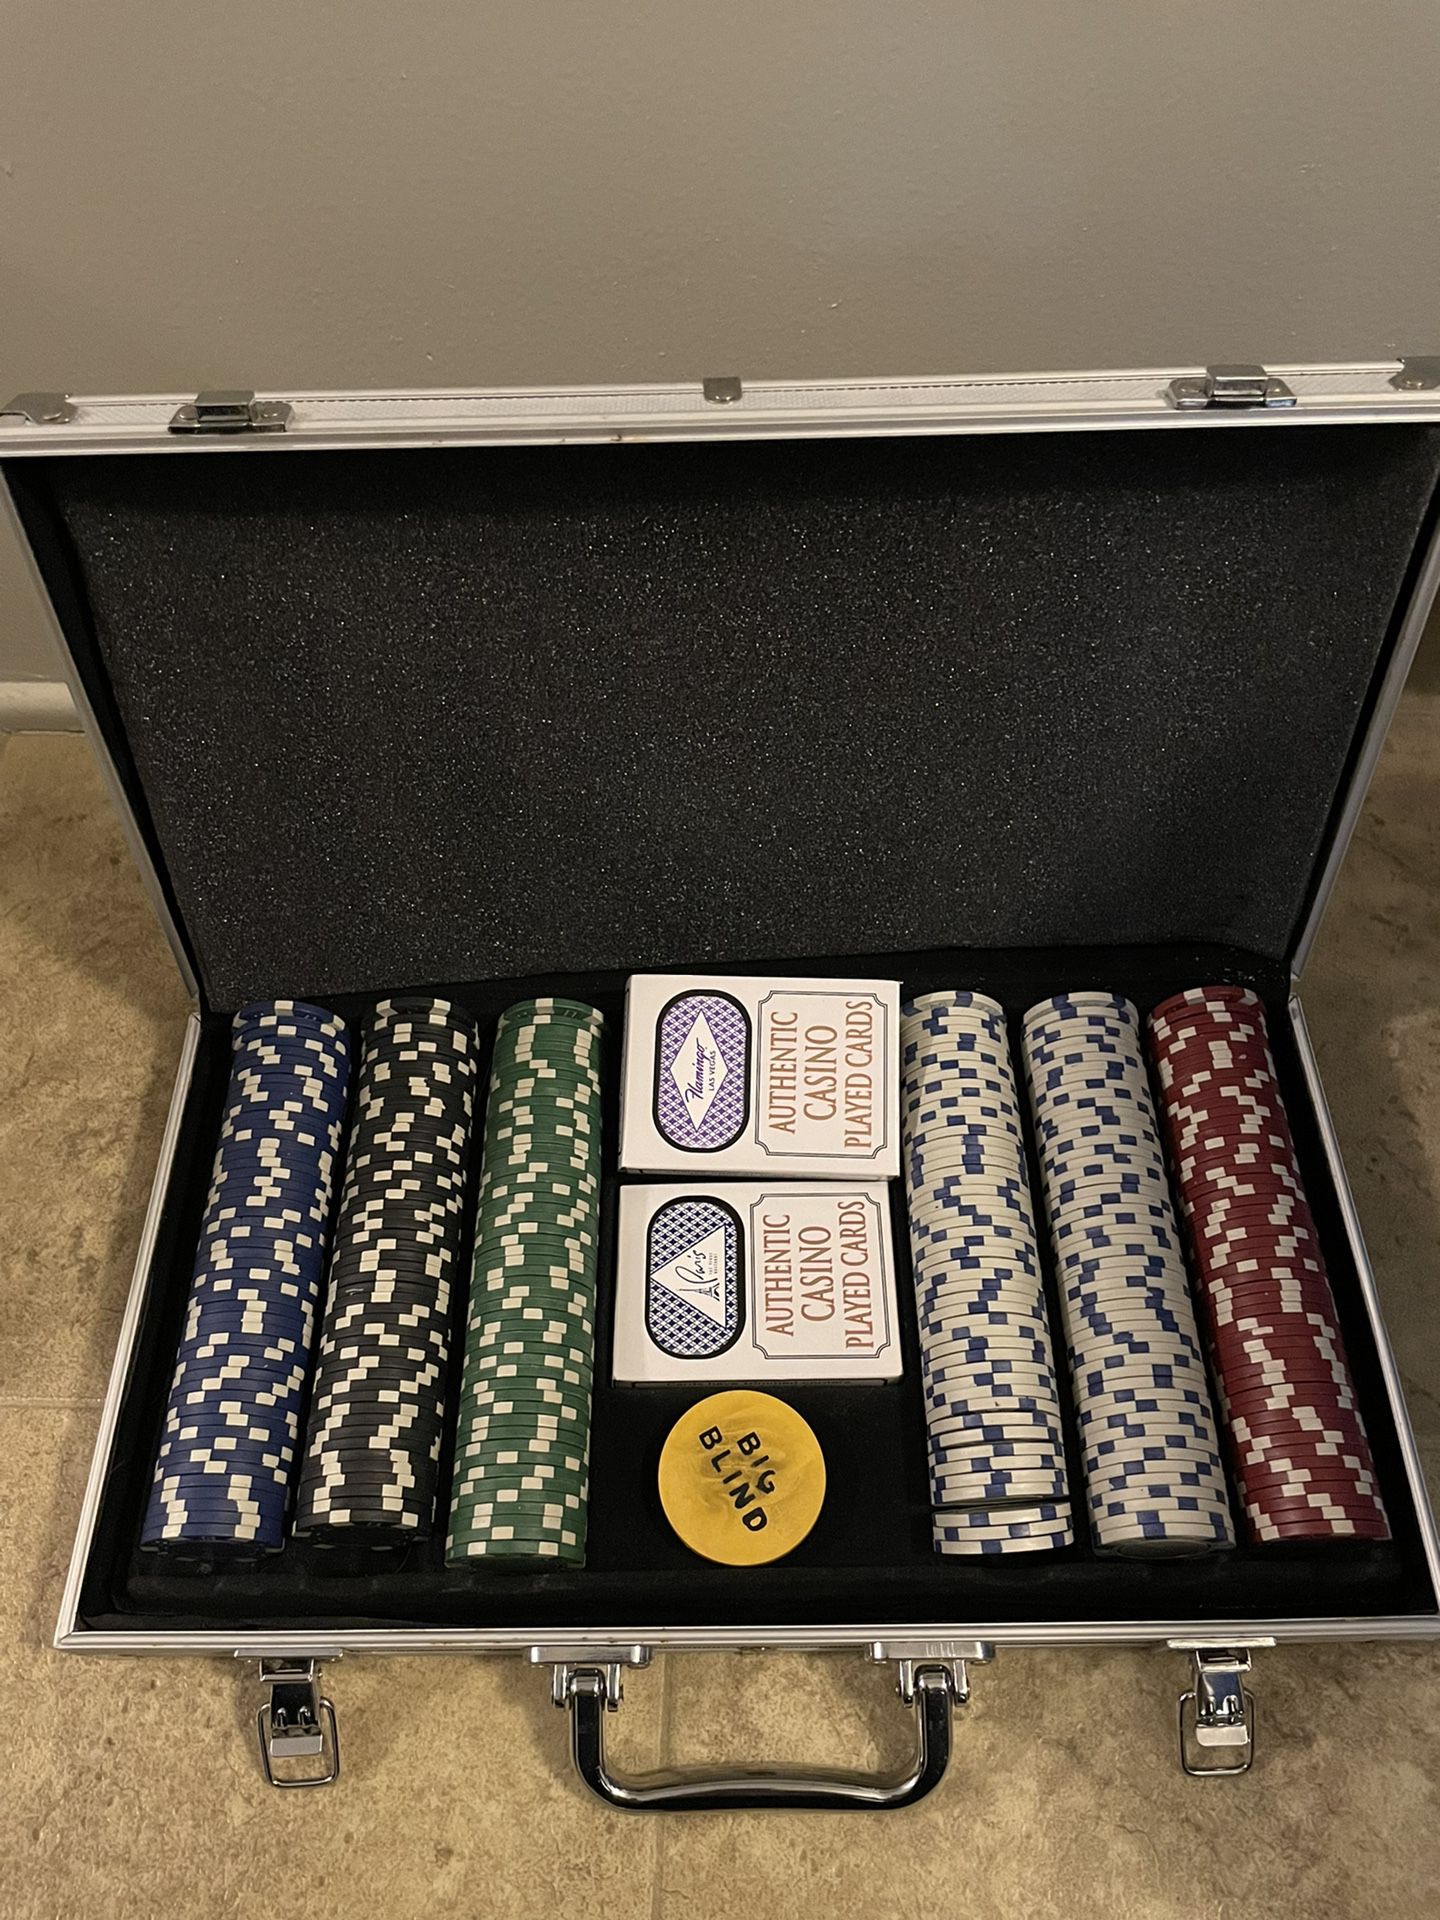 Professional Poker Set